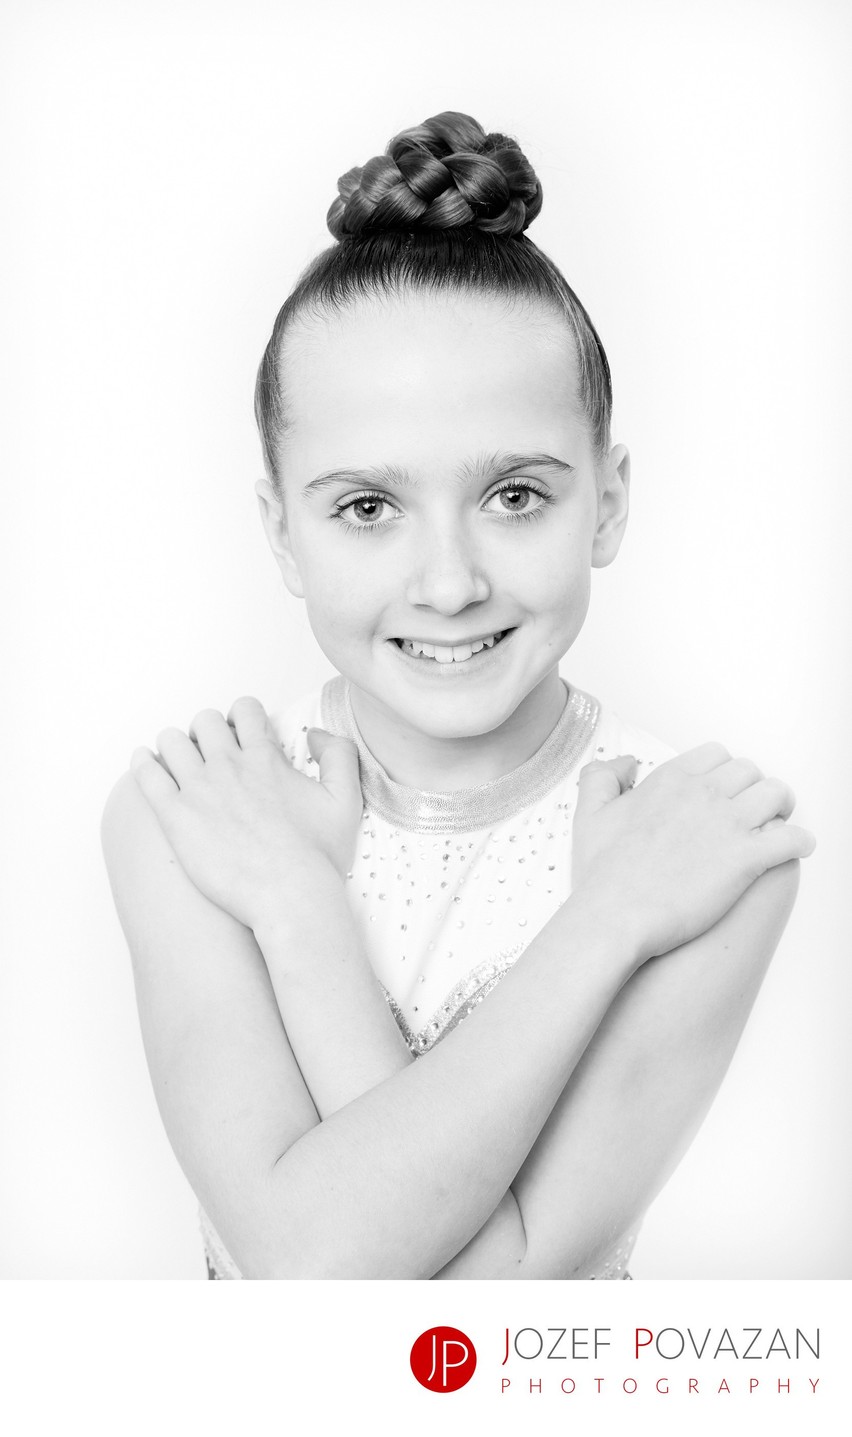 Black and white studio portraits of children gymnasts